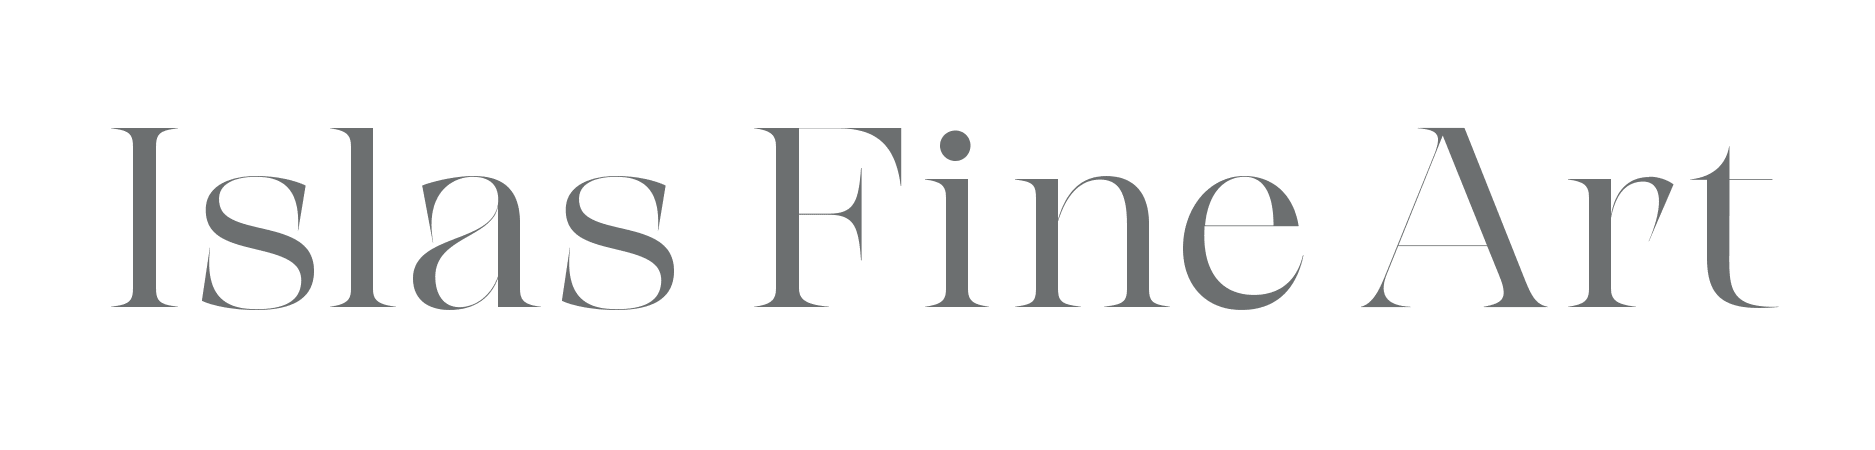 Islas Fine Art company logo